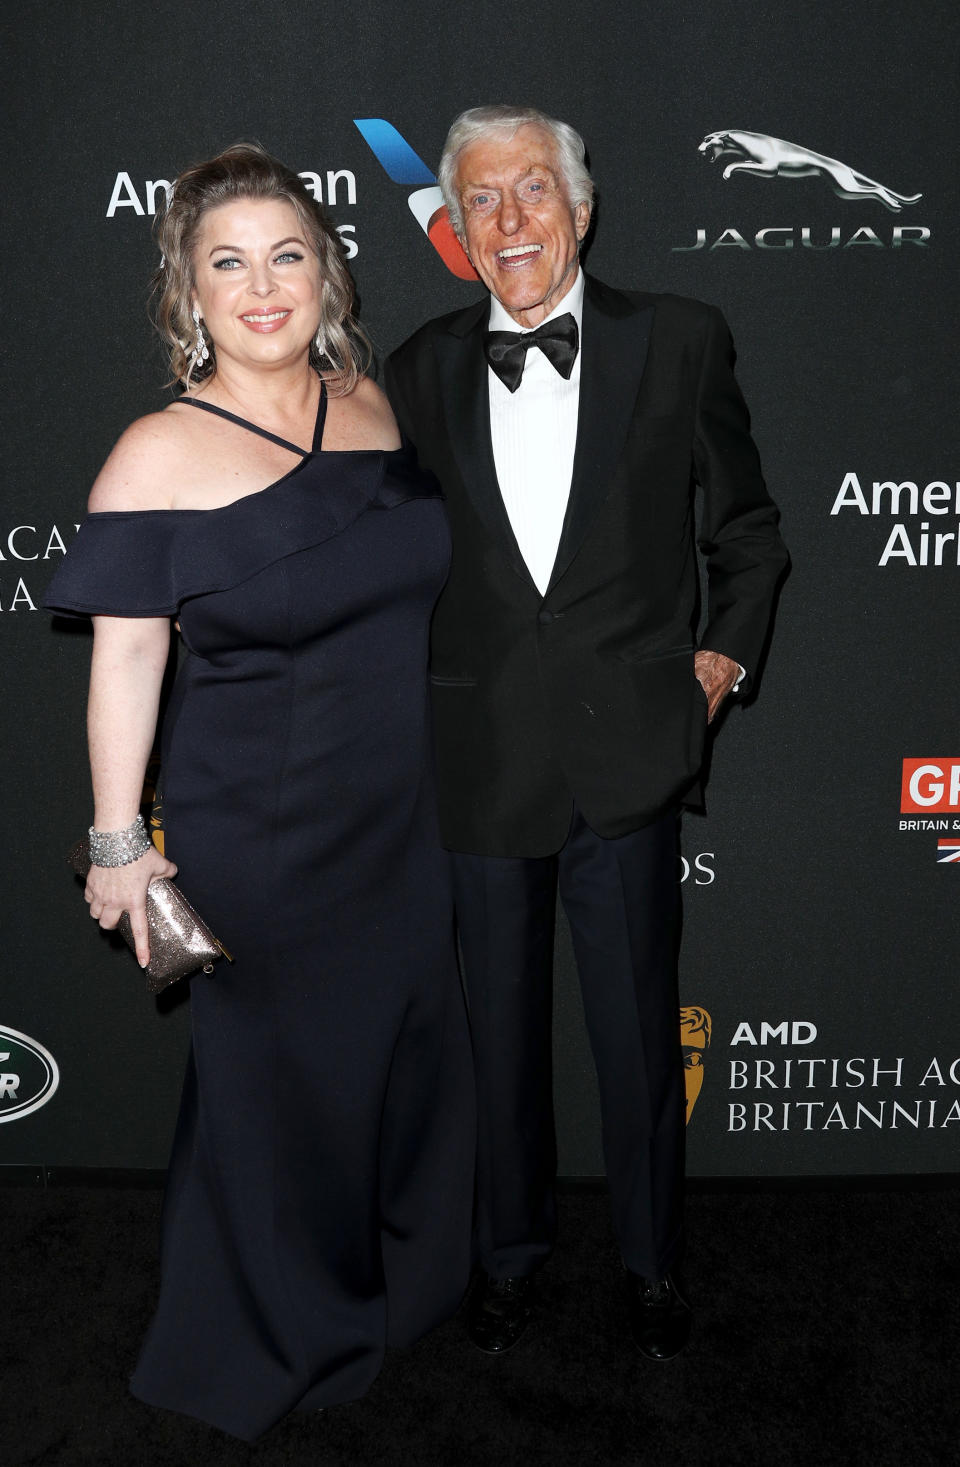 Dick Van Dyke poses in a tuxedo next to wife Arlene Silver 